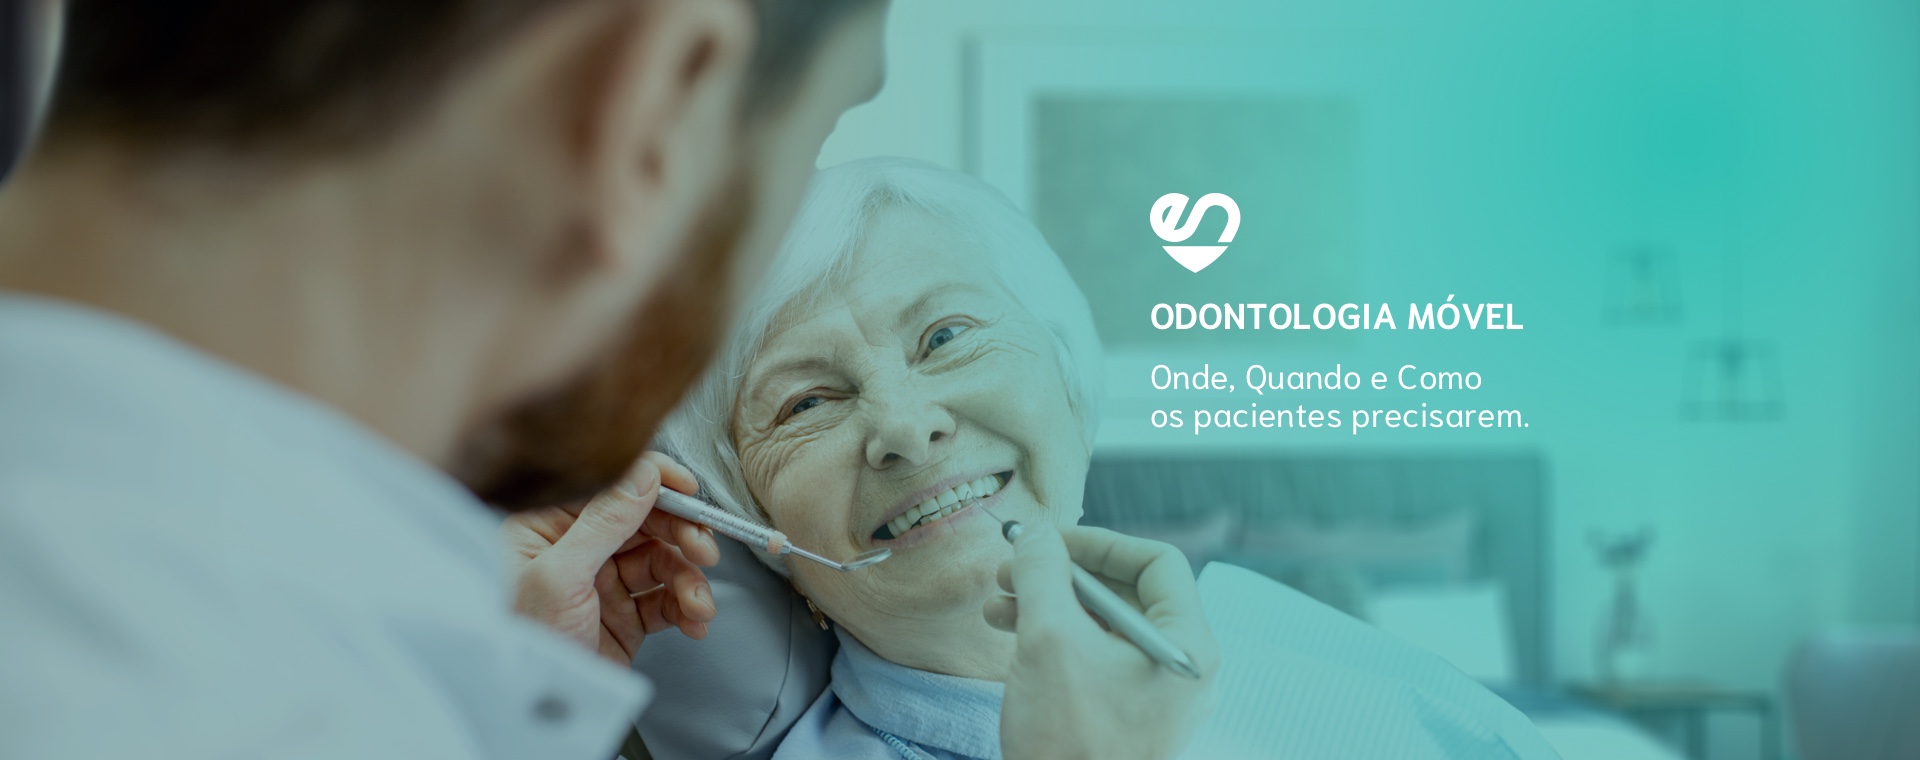 Odontologia home care